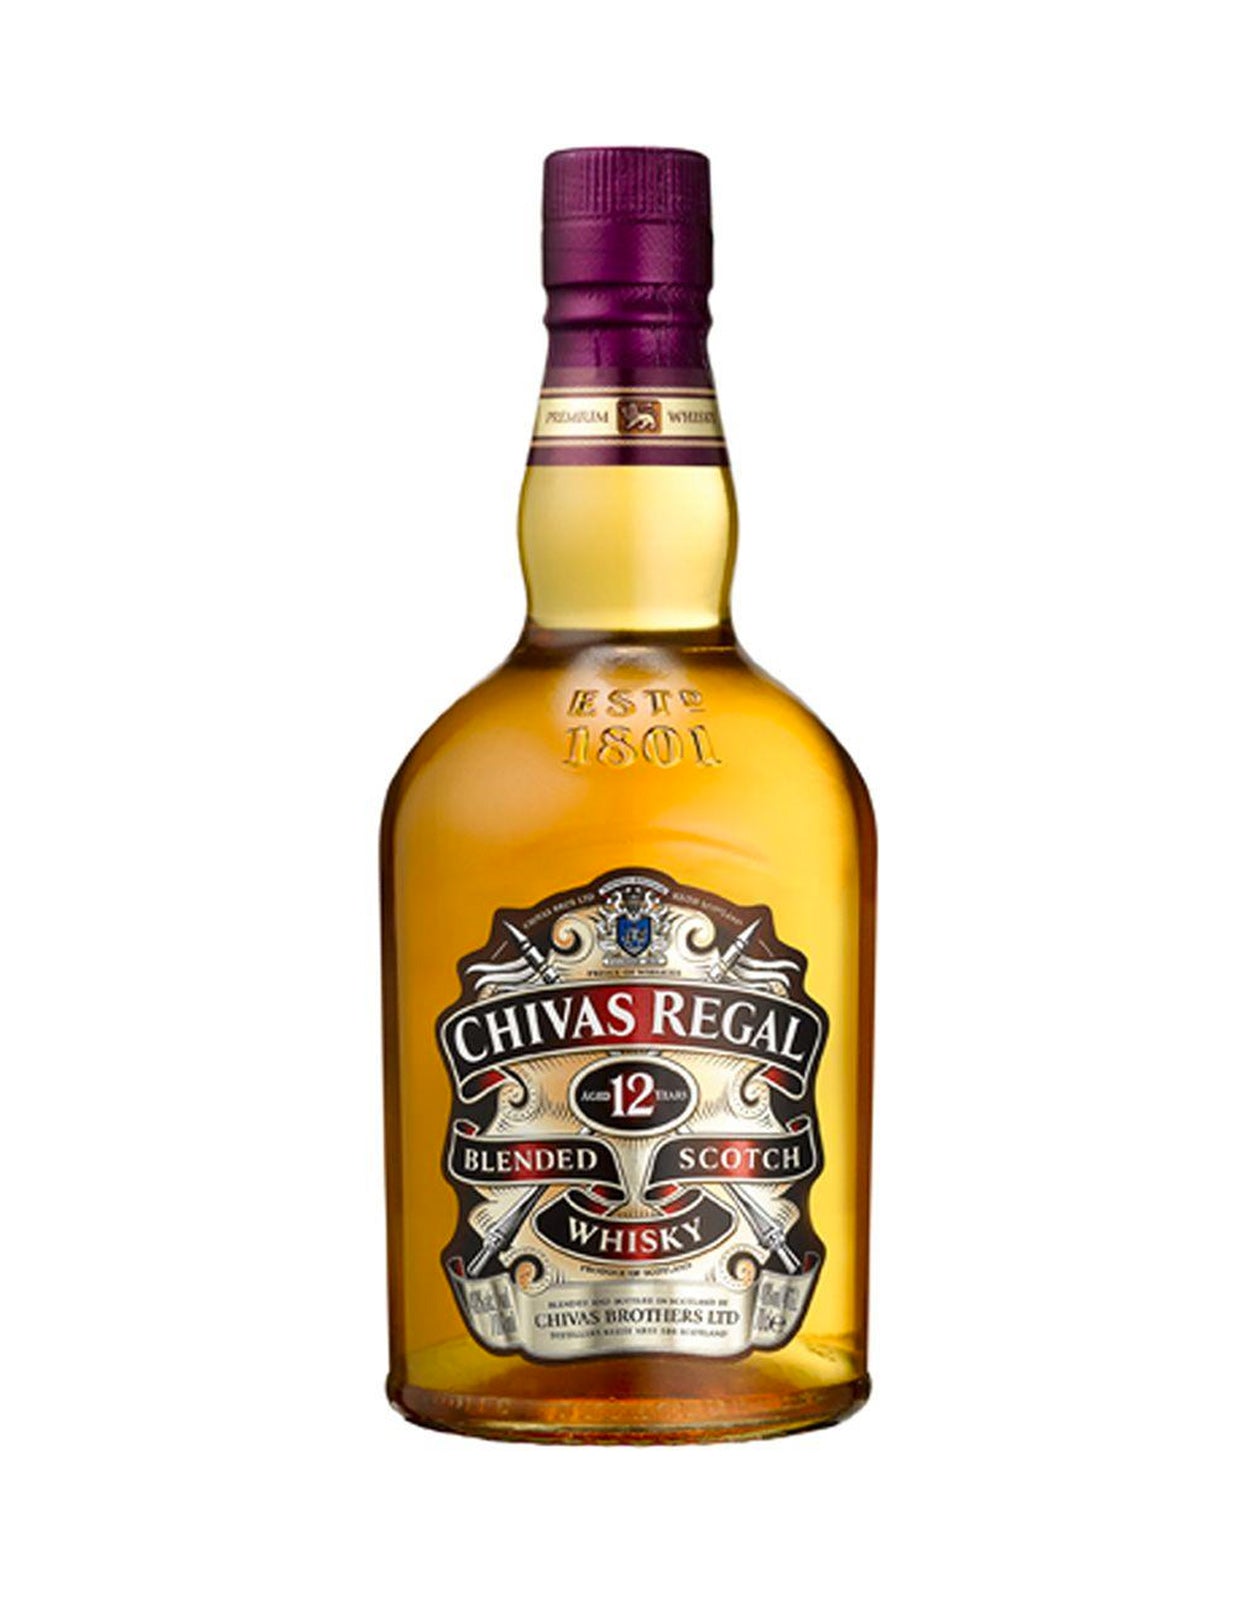 Chivas Regal 12 Year Old - 1.14 Litre Bottle